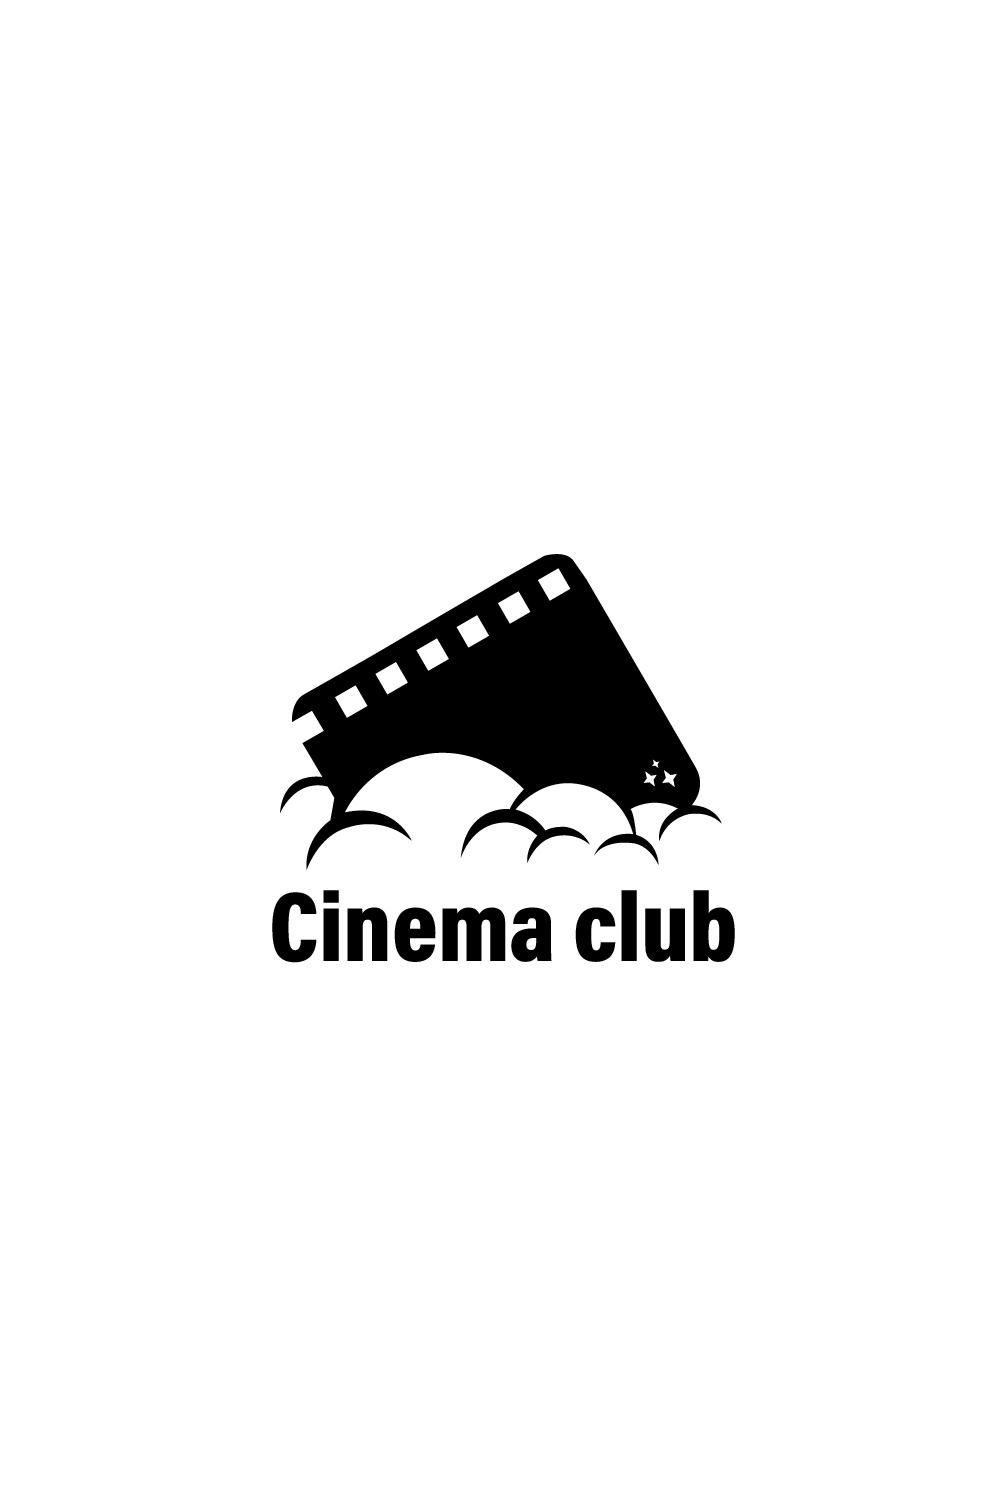 cinema logo pinterest preview image.